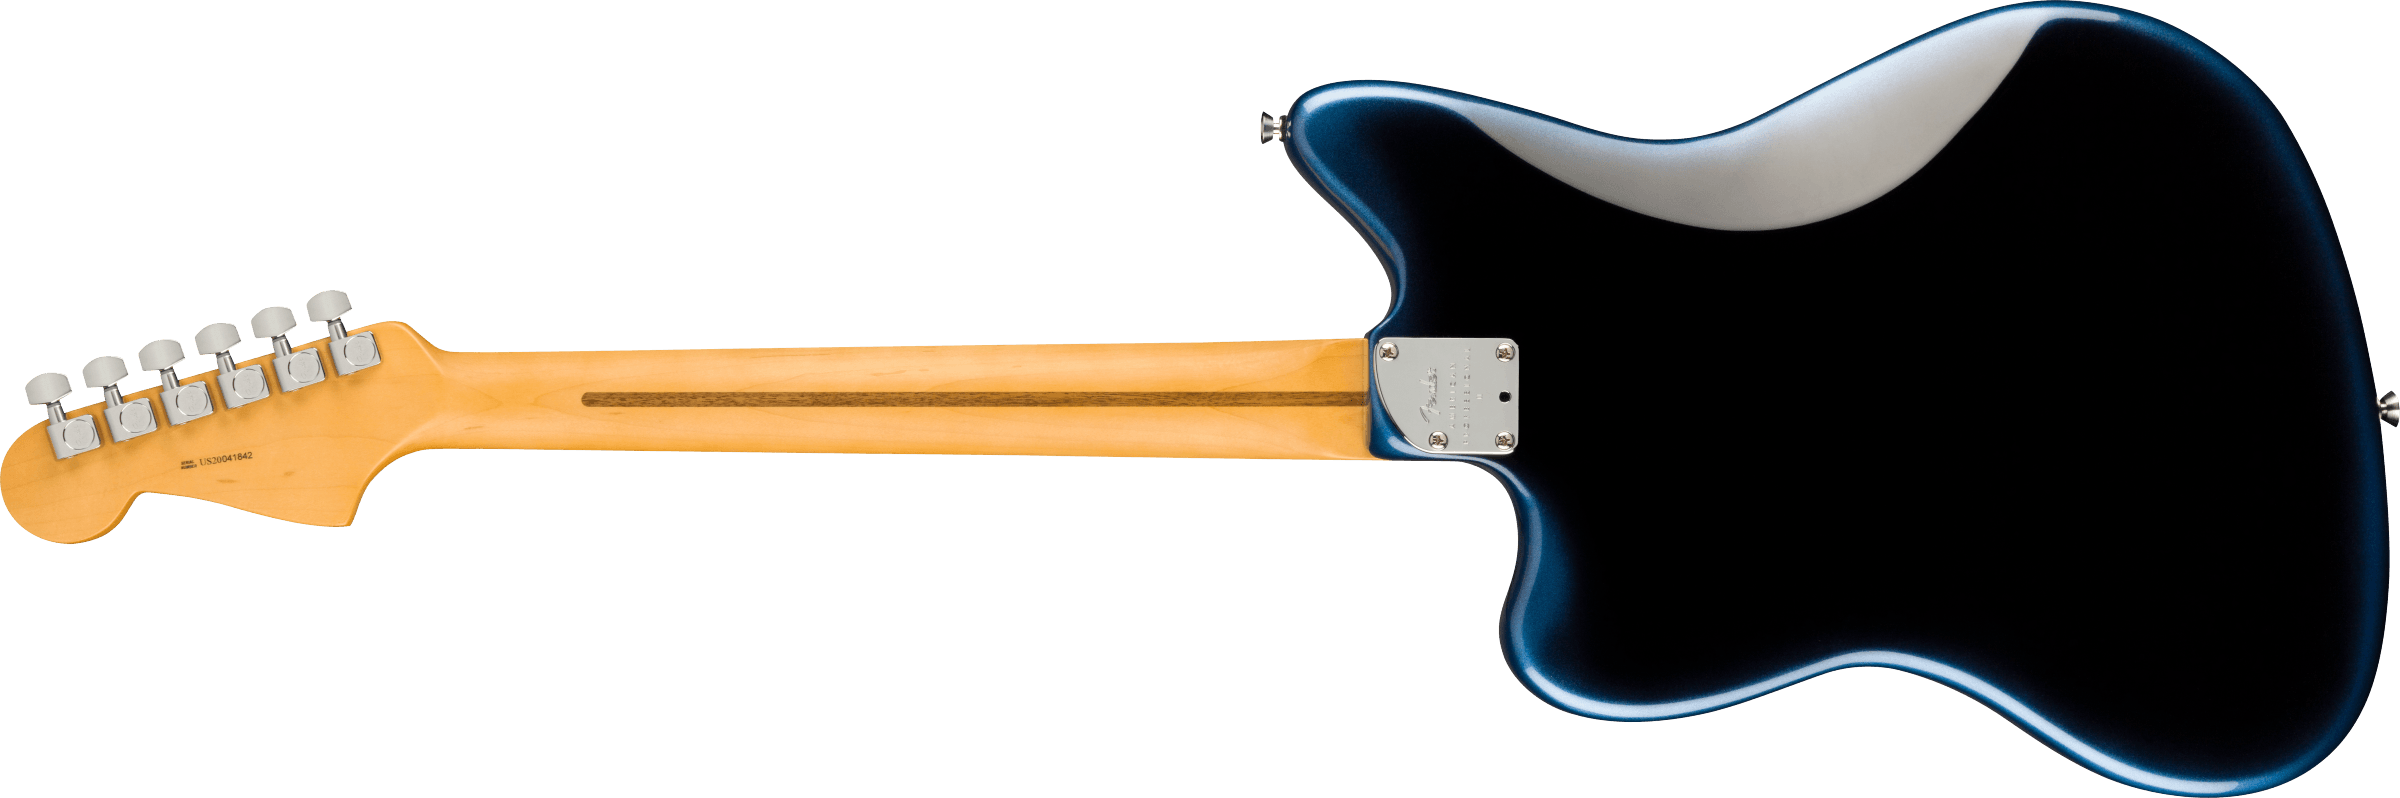 Fender American Professional II Jazzmaster®, Rosewood Fingerboard, Dark Night